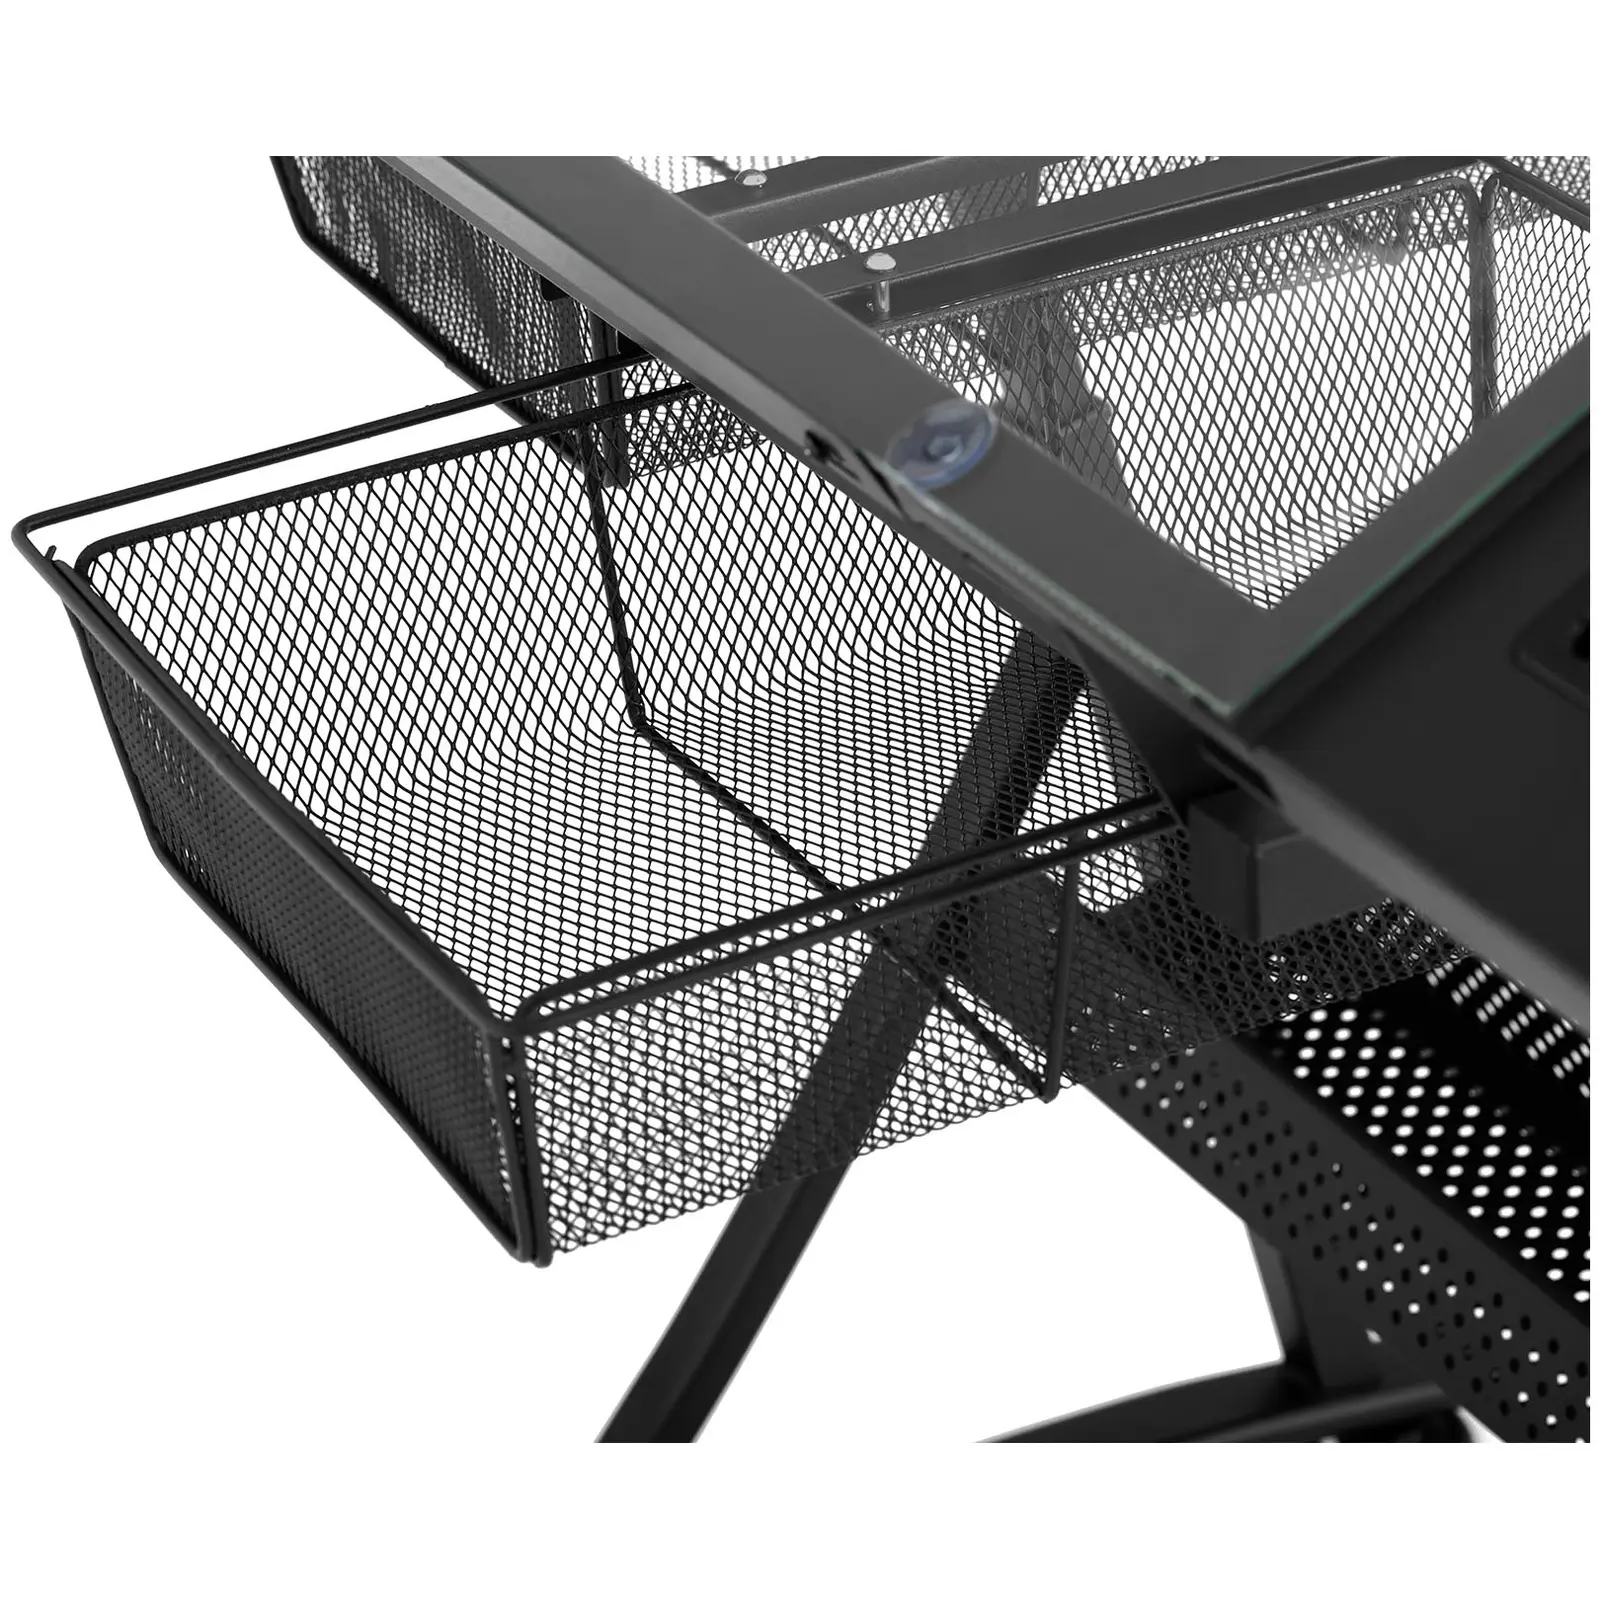 Factory second Drafting Desk - 120 x 60 x 90 cm - tiltable - glass top